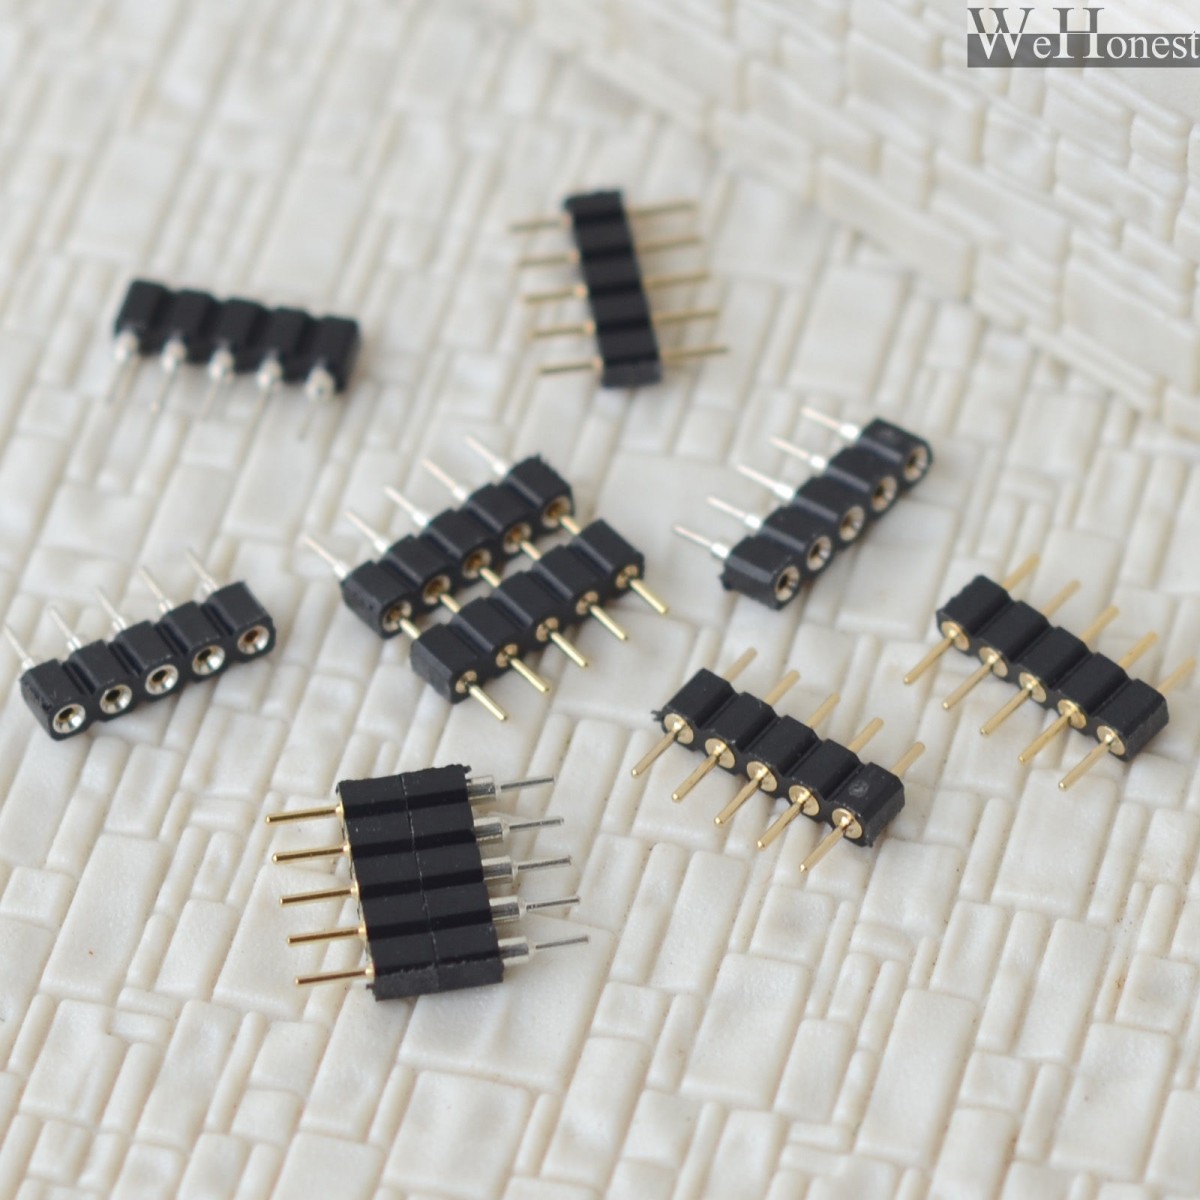 10 pairs 5 Pins mini-plug kits 2.54mm straight connectors round male + female